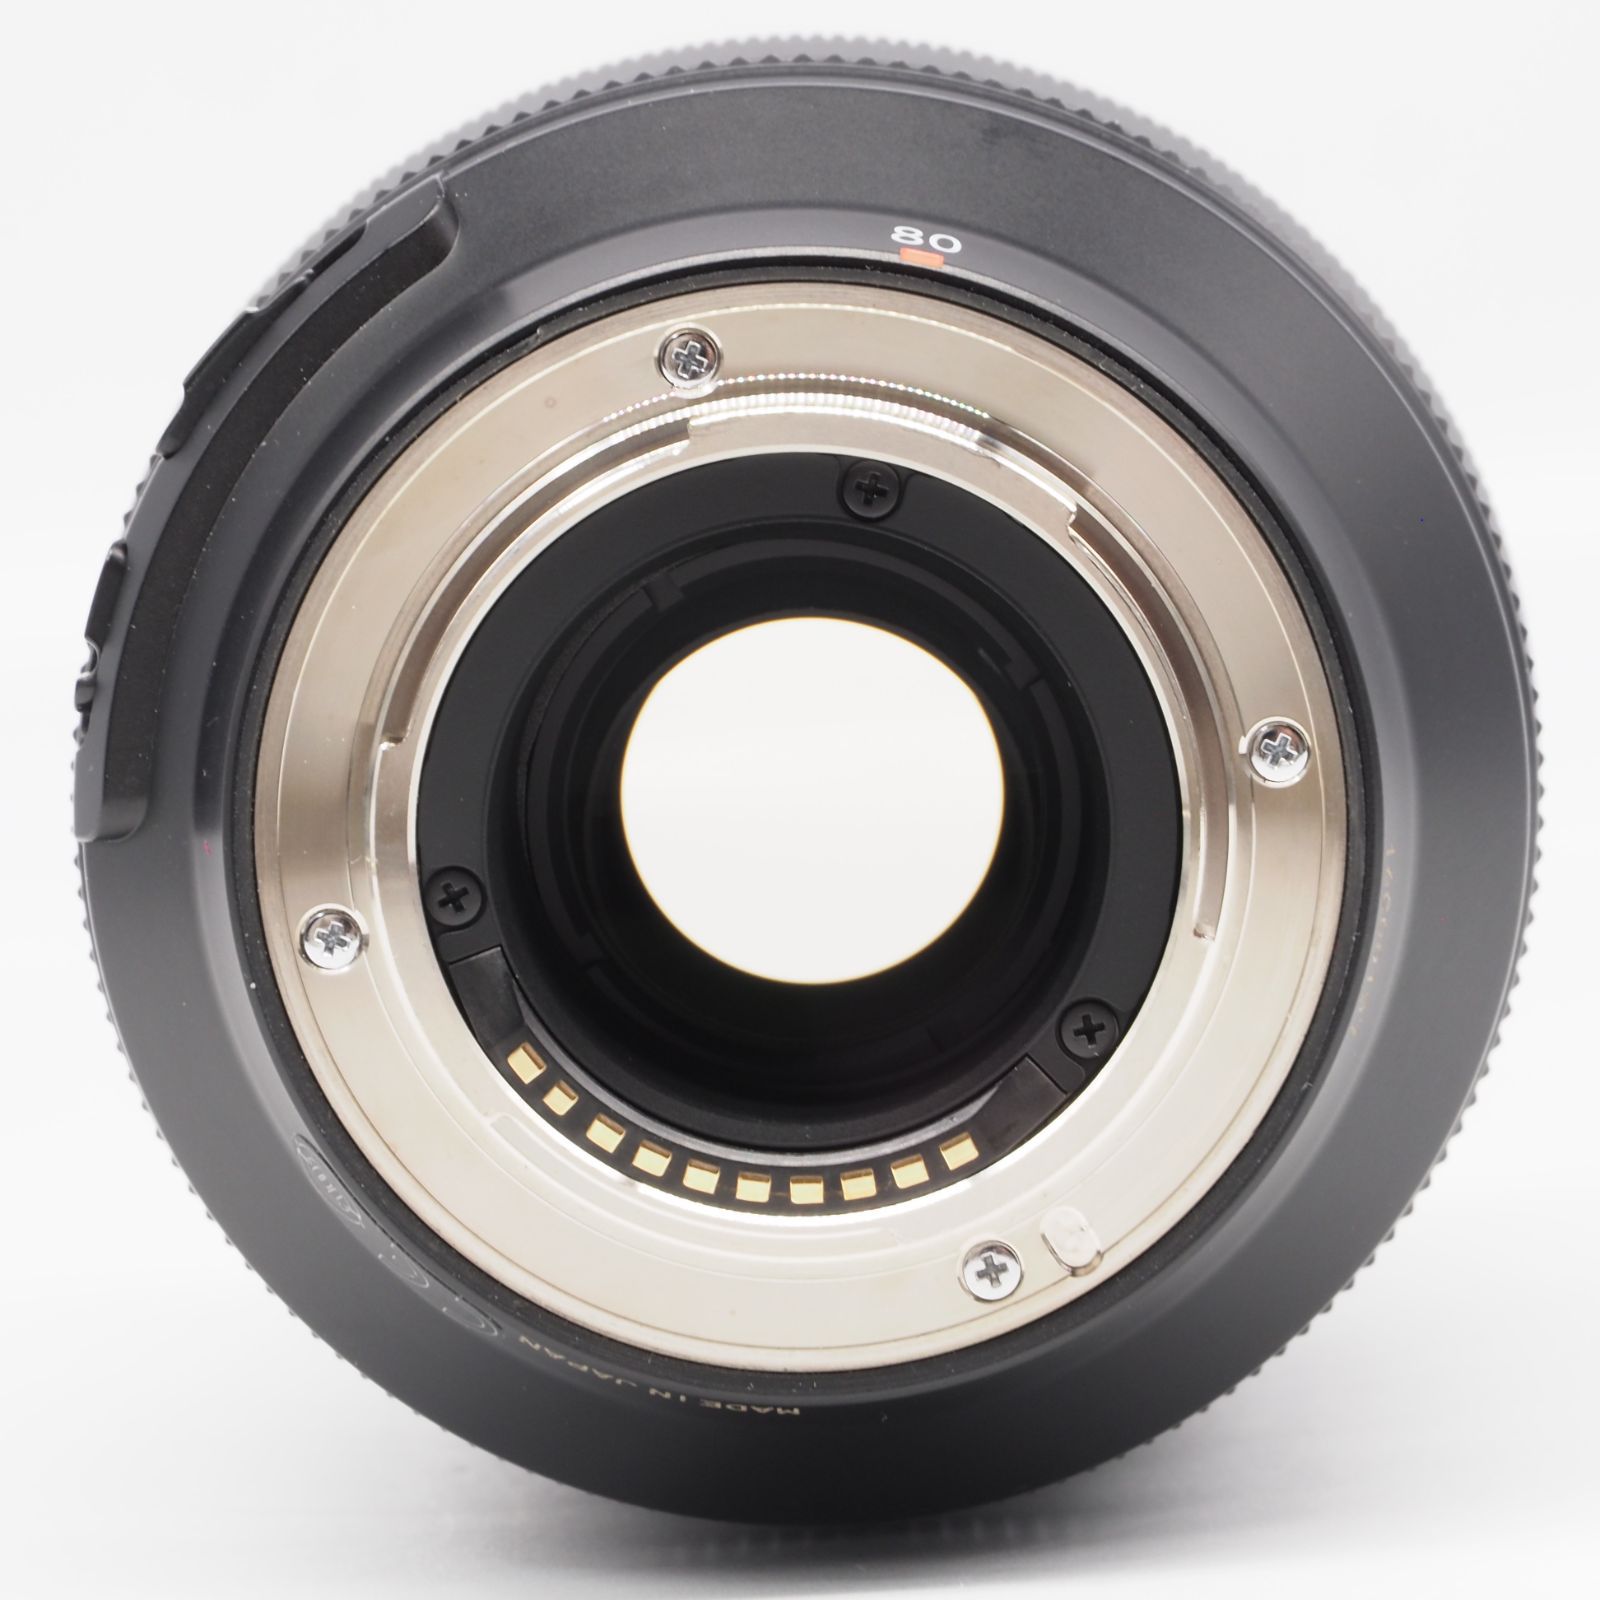 FUJIFILM X 交換レンズ フジノン 単焦点 望遠 大口径 90mm F2 防塵防滴耐低温 リニアモーター(静音) 絞りリング F X - 2